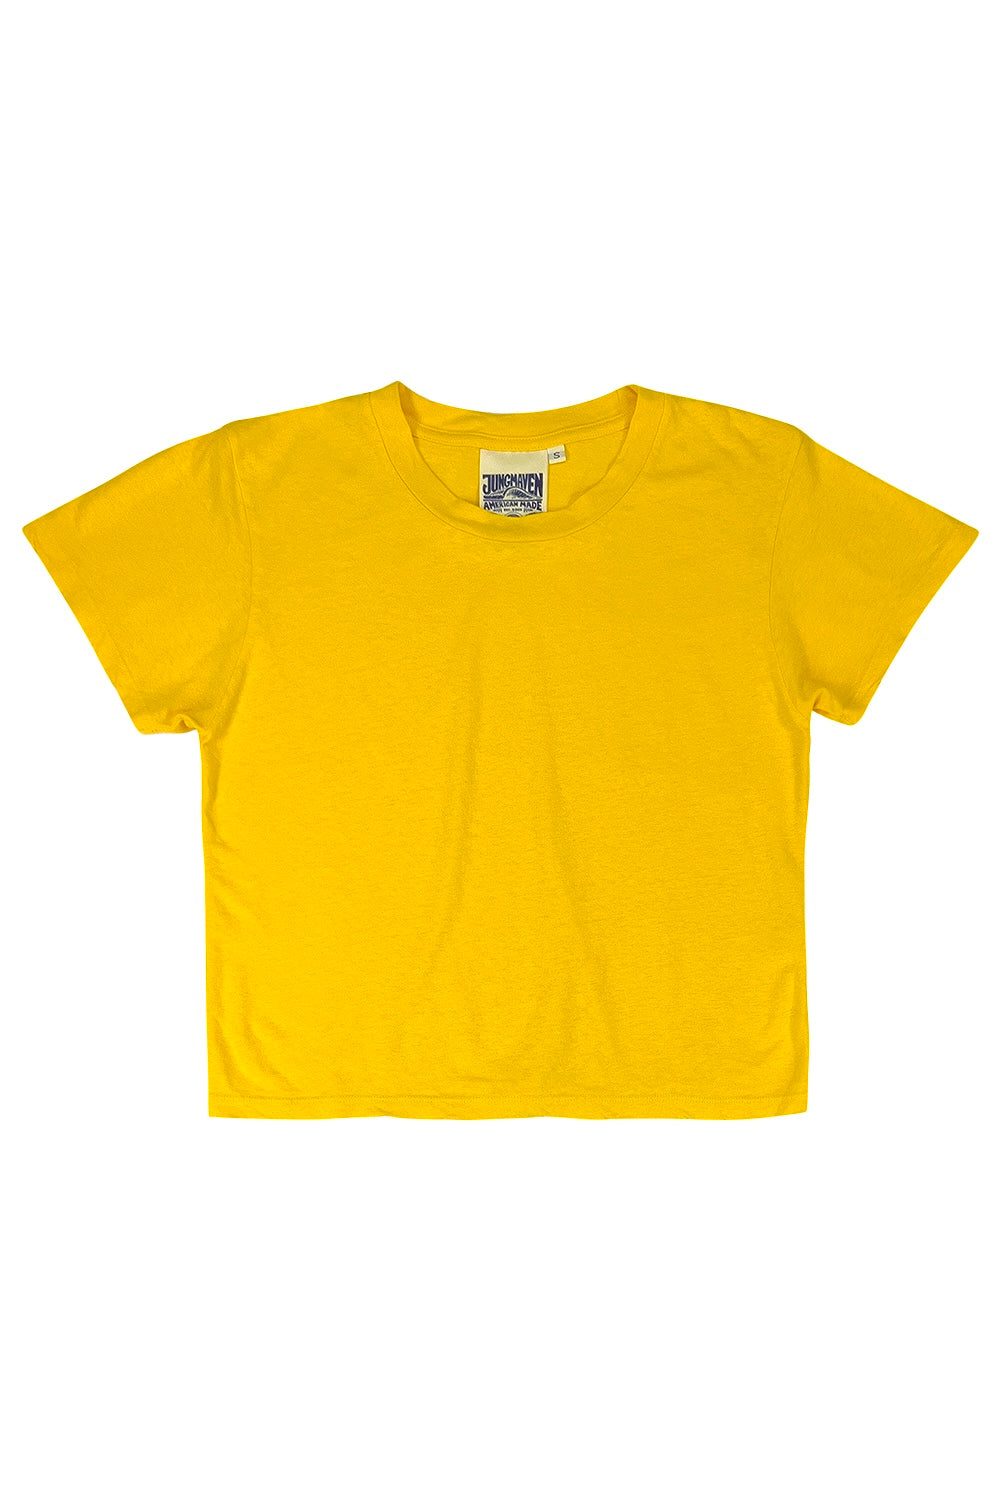 Cropped Lorel Tee | Jungmaven Hemp Clothing & Accessories / Color: Sunshine Yellow